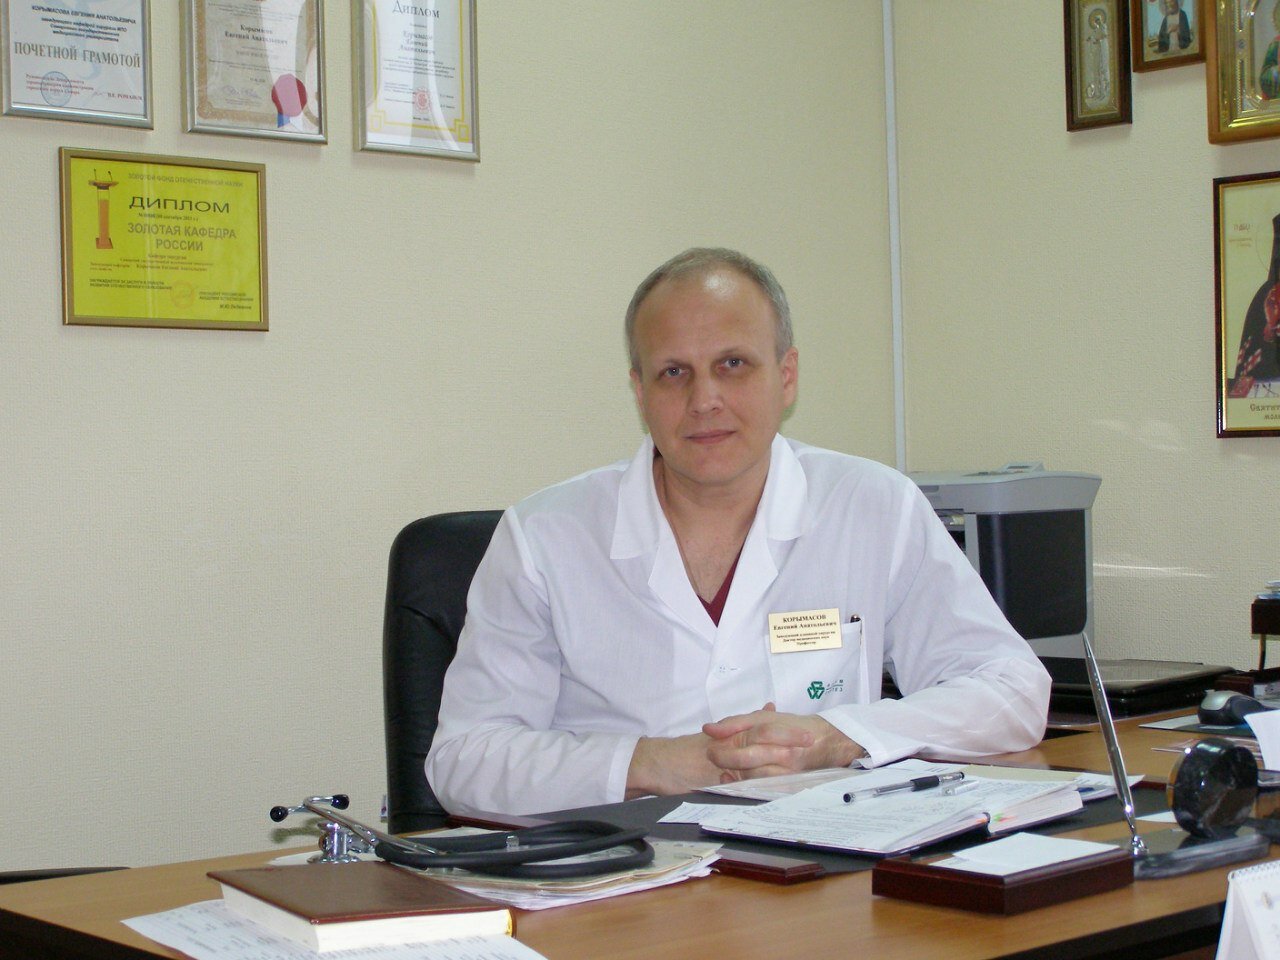 Korimasov